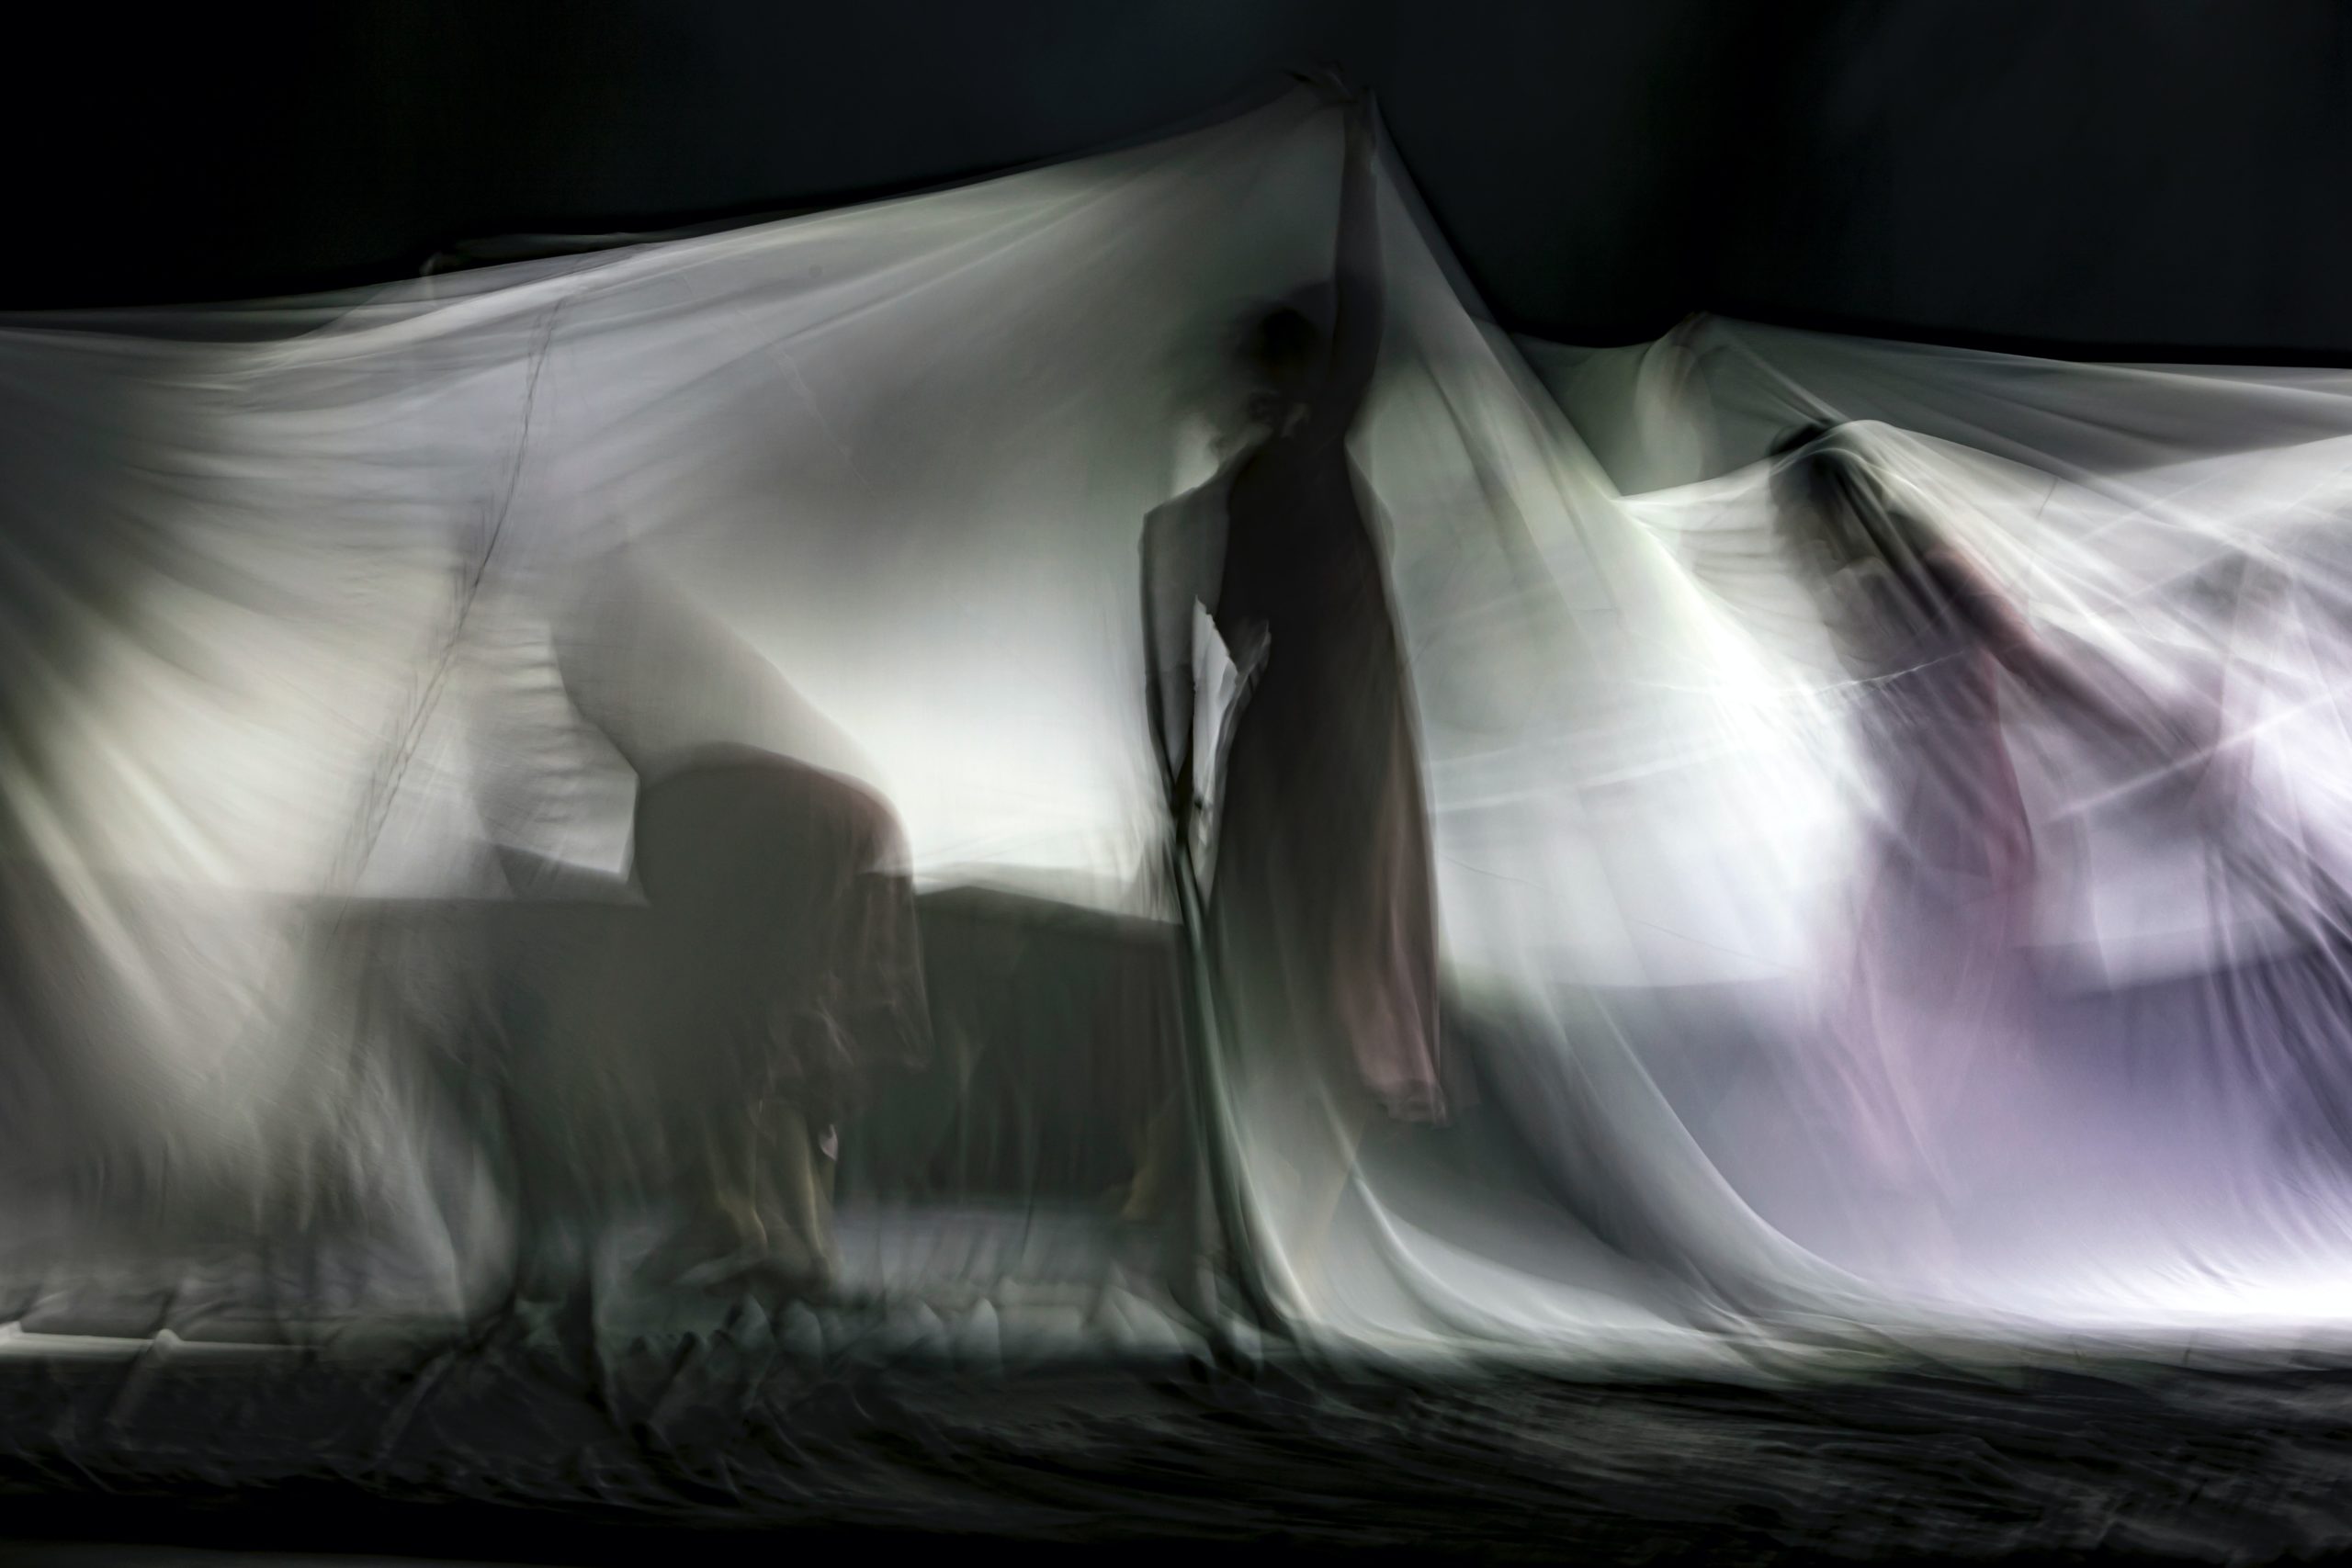 A group of women dancing underneath a veil (Photo by Hulki Okan Tabak on Unsplash)